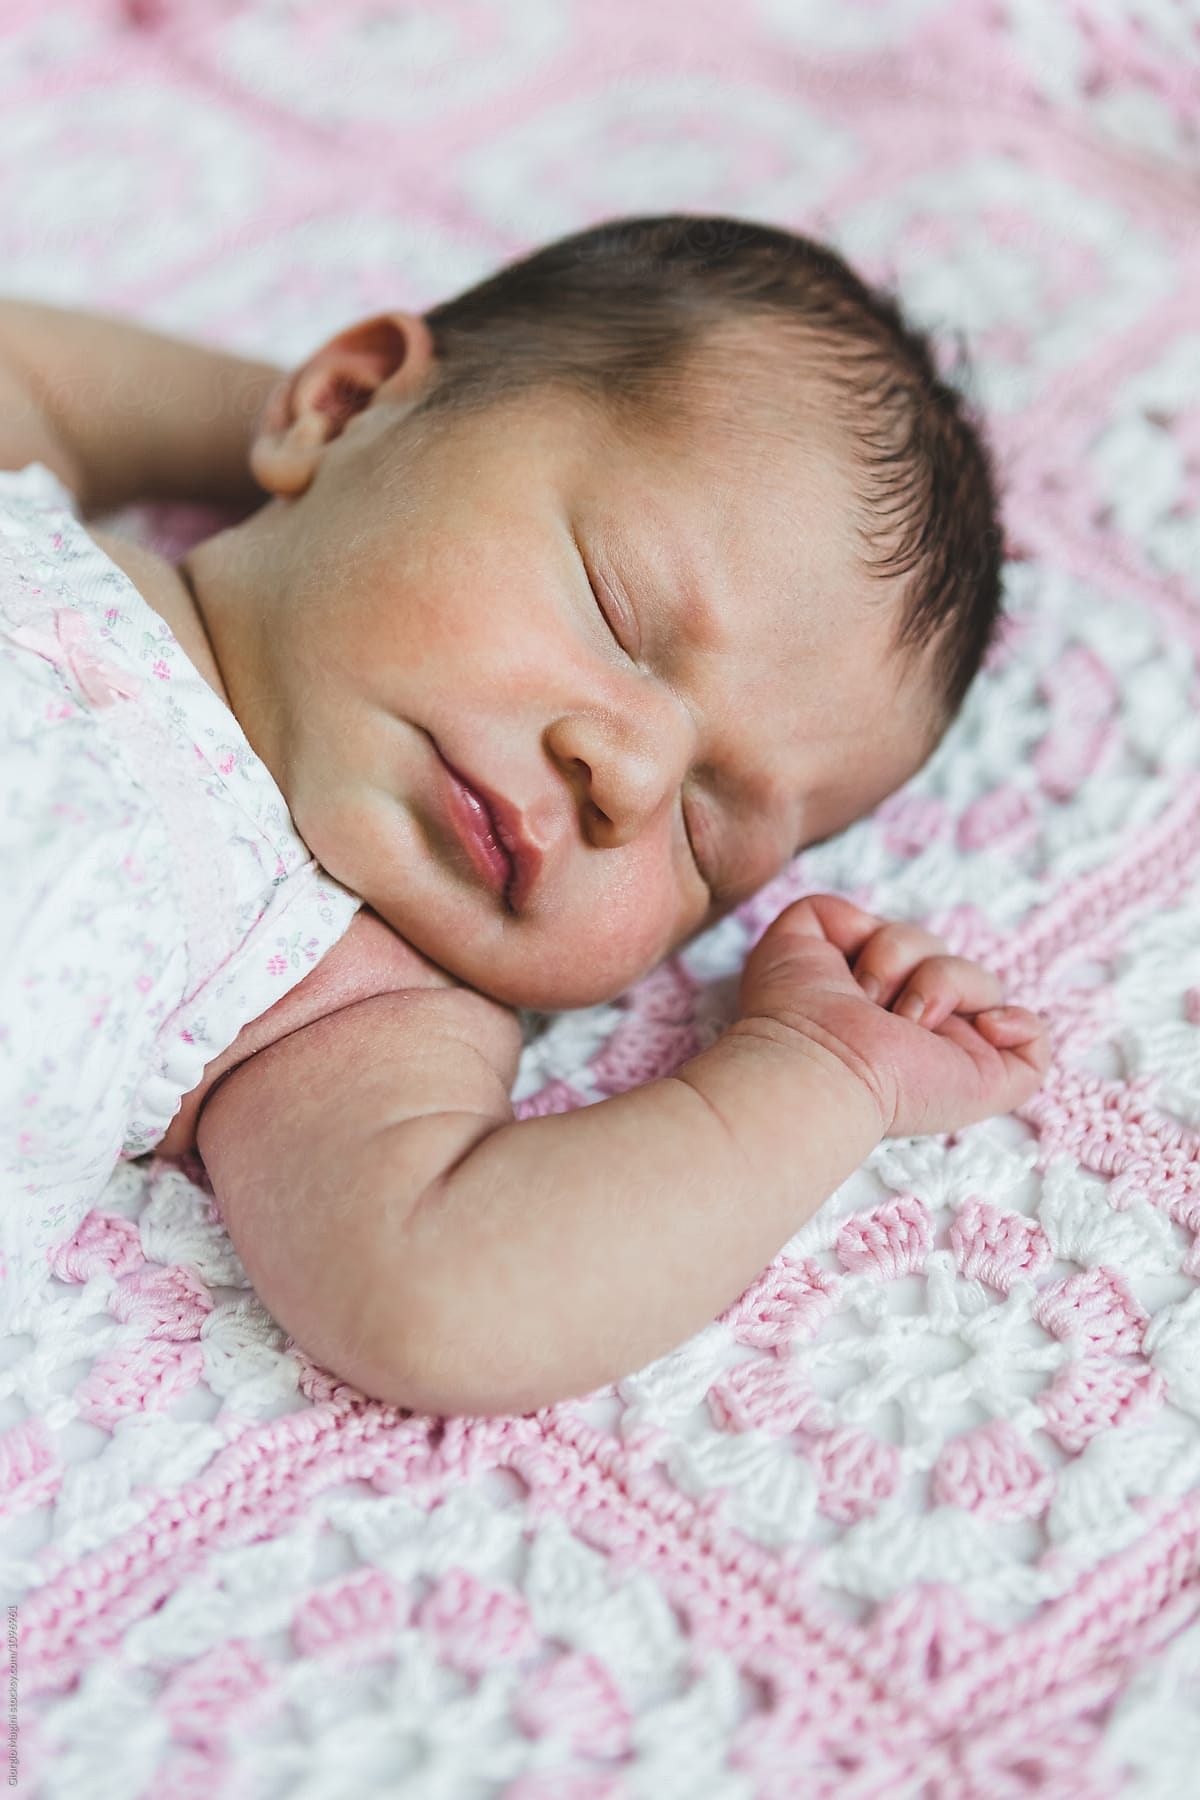 Newborn Baby Girl Sleeping on an Handmade Blanket